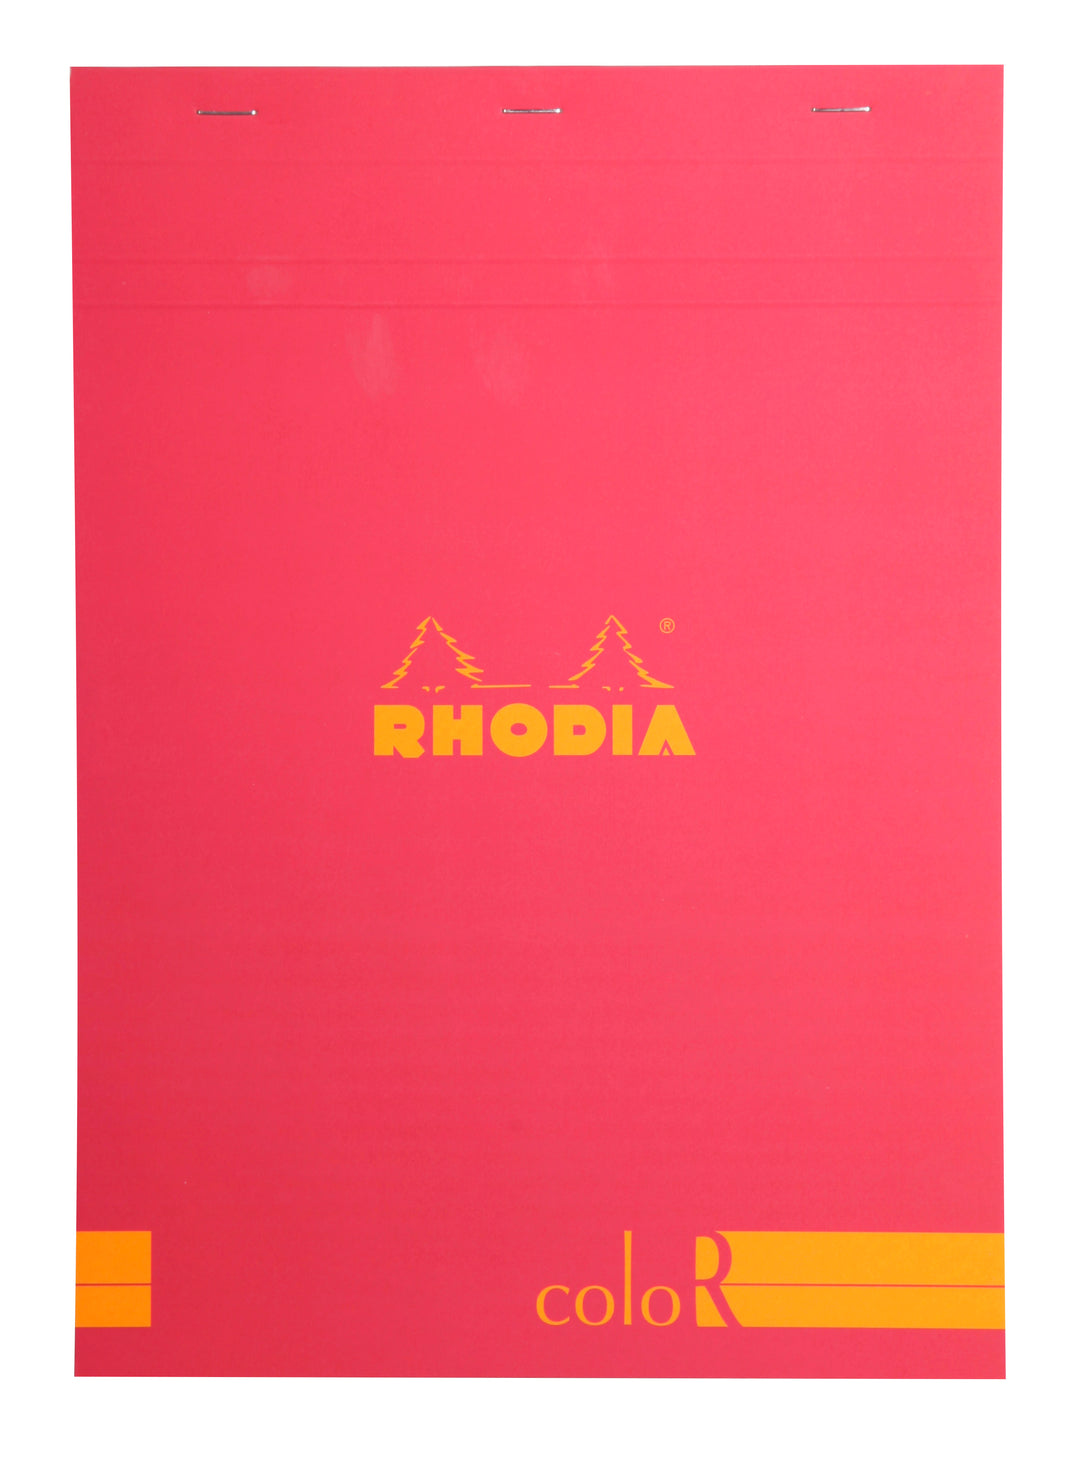 Rhodia Basics coloR Stapled Line Ruled Notepad - A4